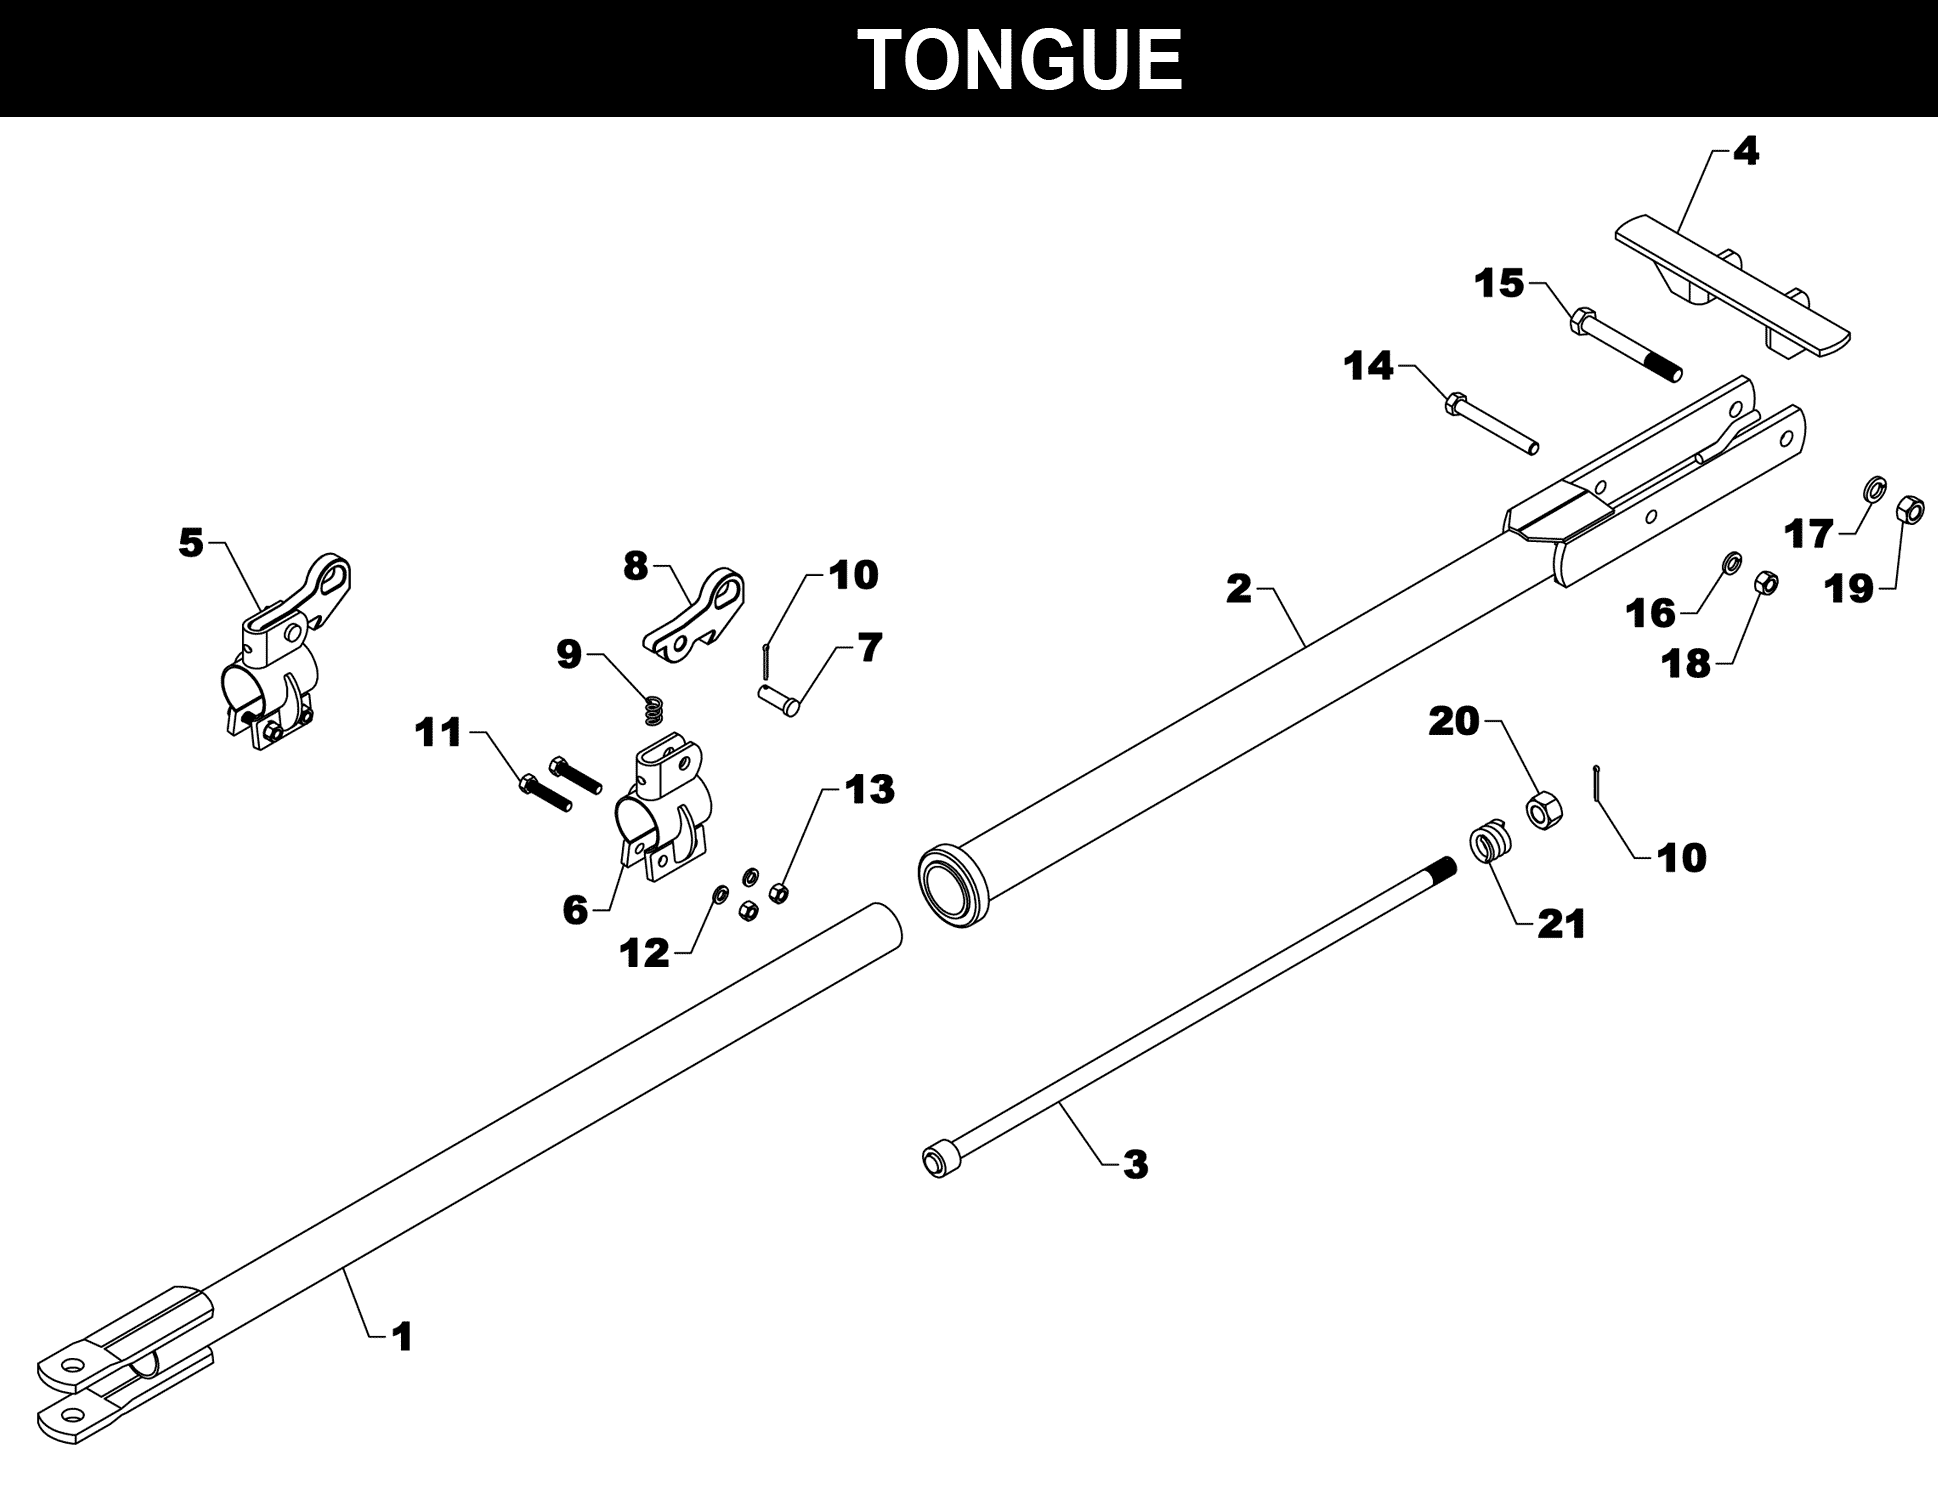 WW-1610 Tongue 